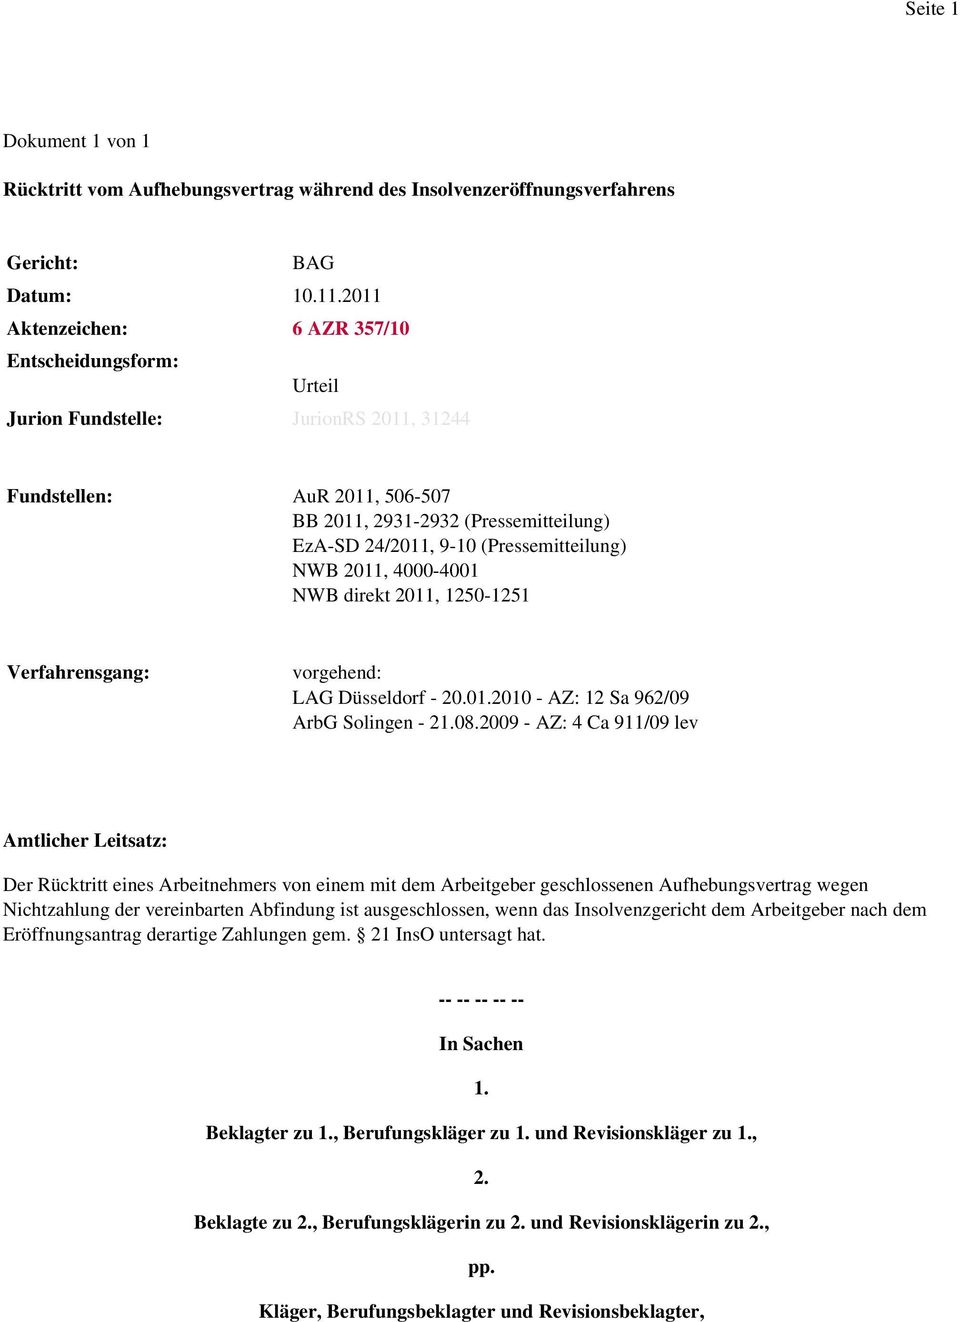 (Pressemitteilung) NWB 2011, 4000-4001 NWB direkt 2011, 1250-1251 Verfahrensgang: vorgehend: LAG Düsseldorf - 20.01.2010 - AZ: 12 Sa 962/09 ArbG Solingen - 21.08.